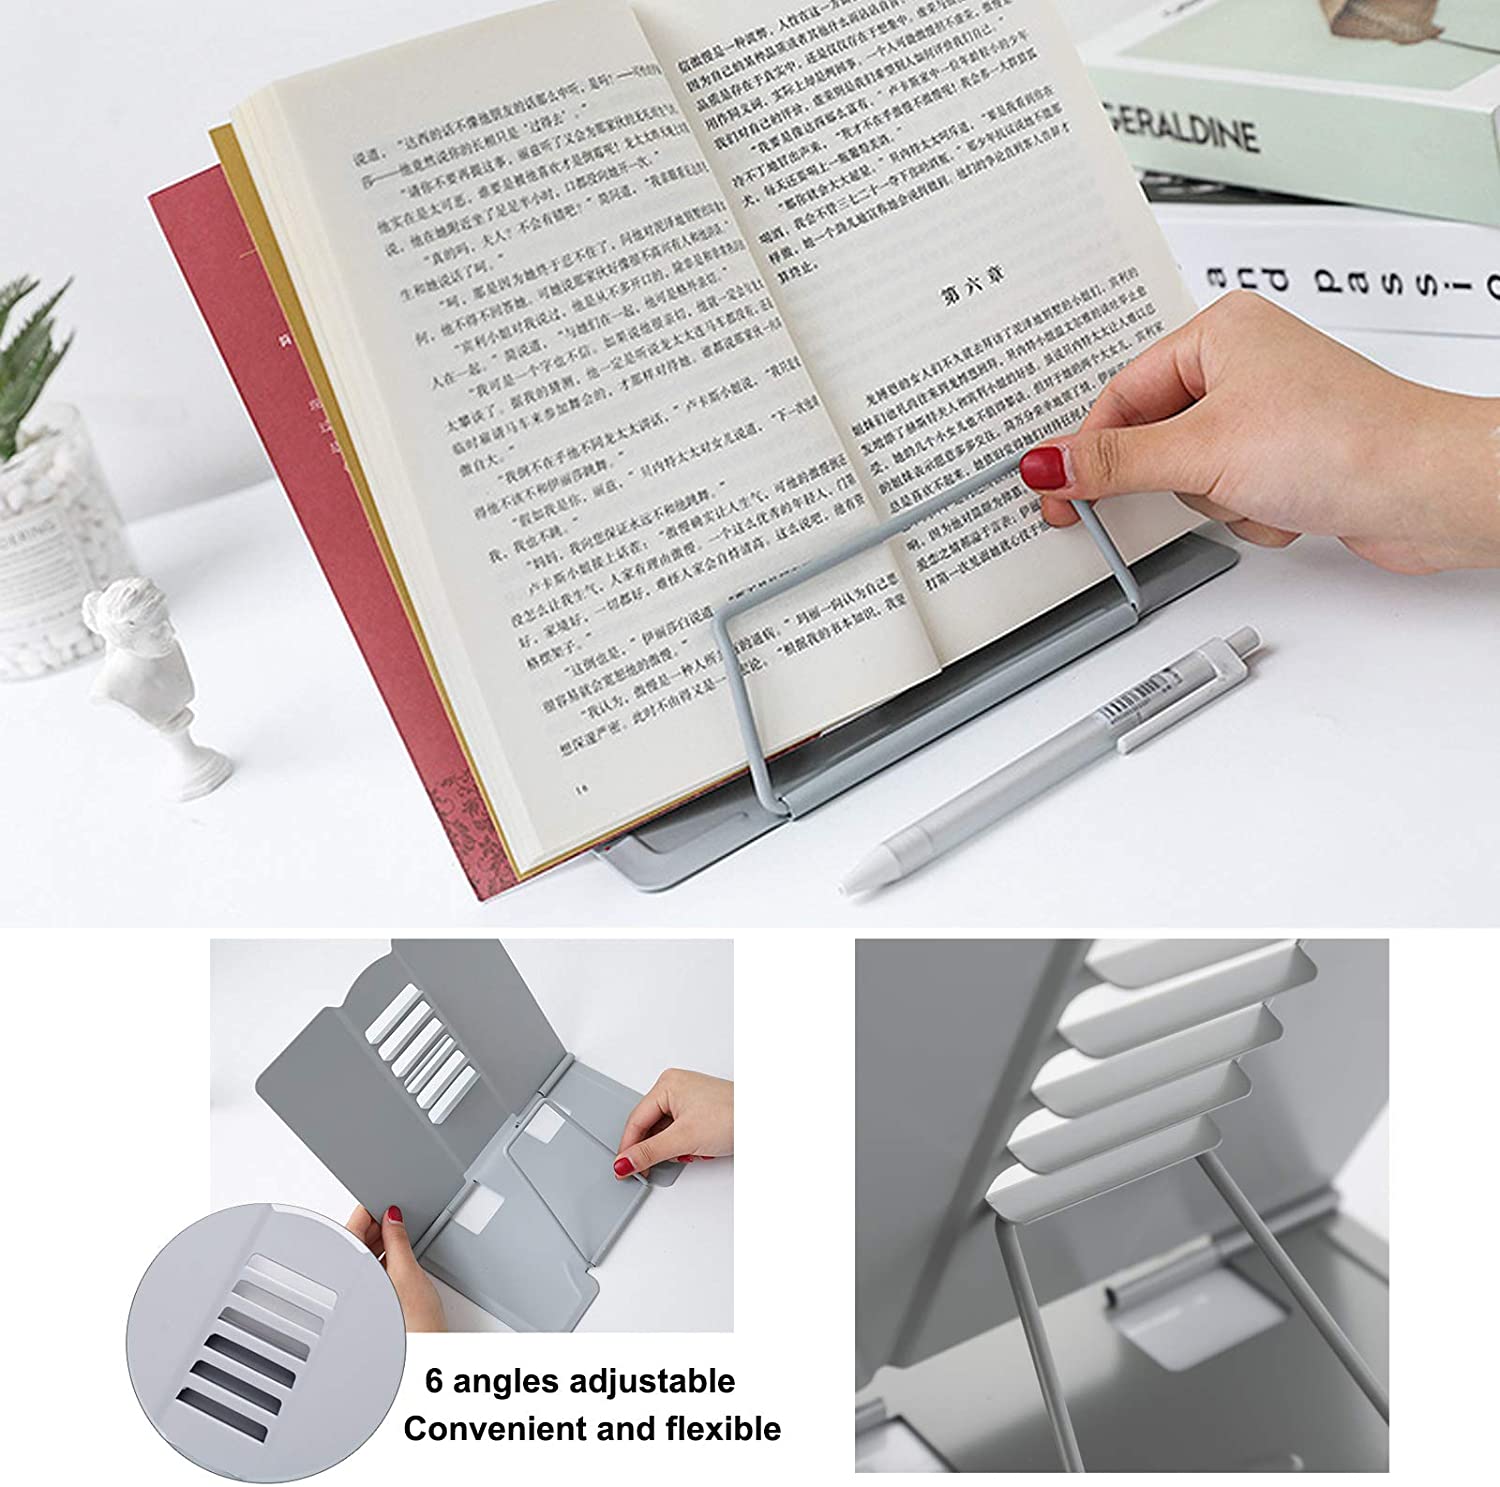 MSDADA Desk Book Stand Metal Reading Rest Book Holder Angle Adjustable Stand Document Holder Portable Sturdy Lightweight Bookstands-Textbooks Tablet